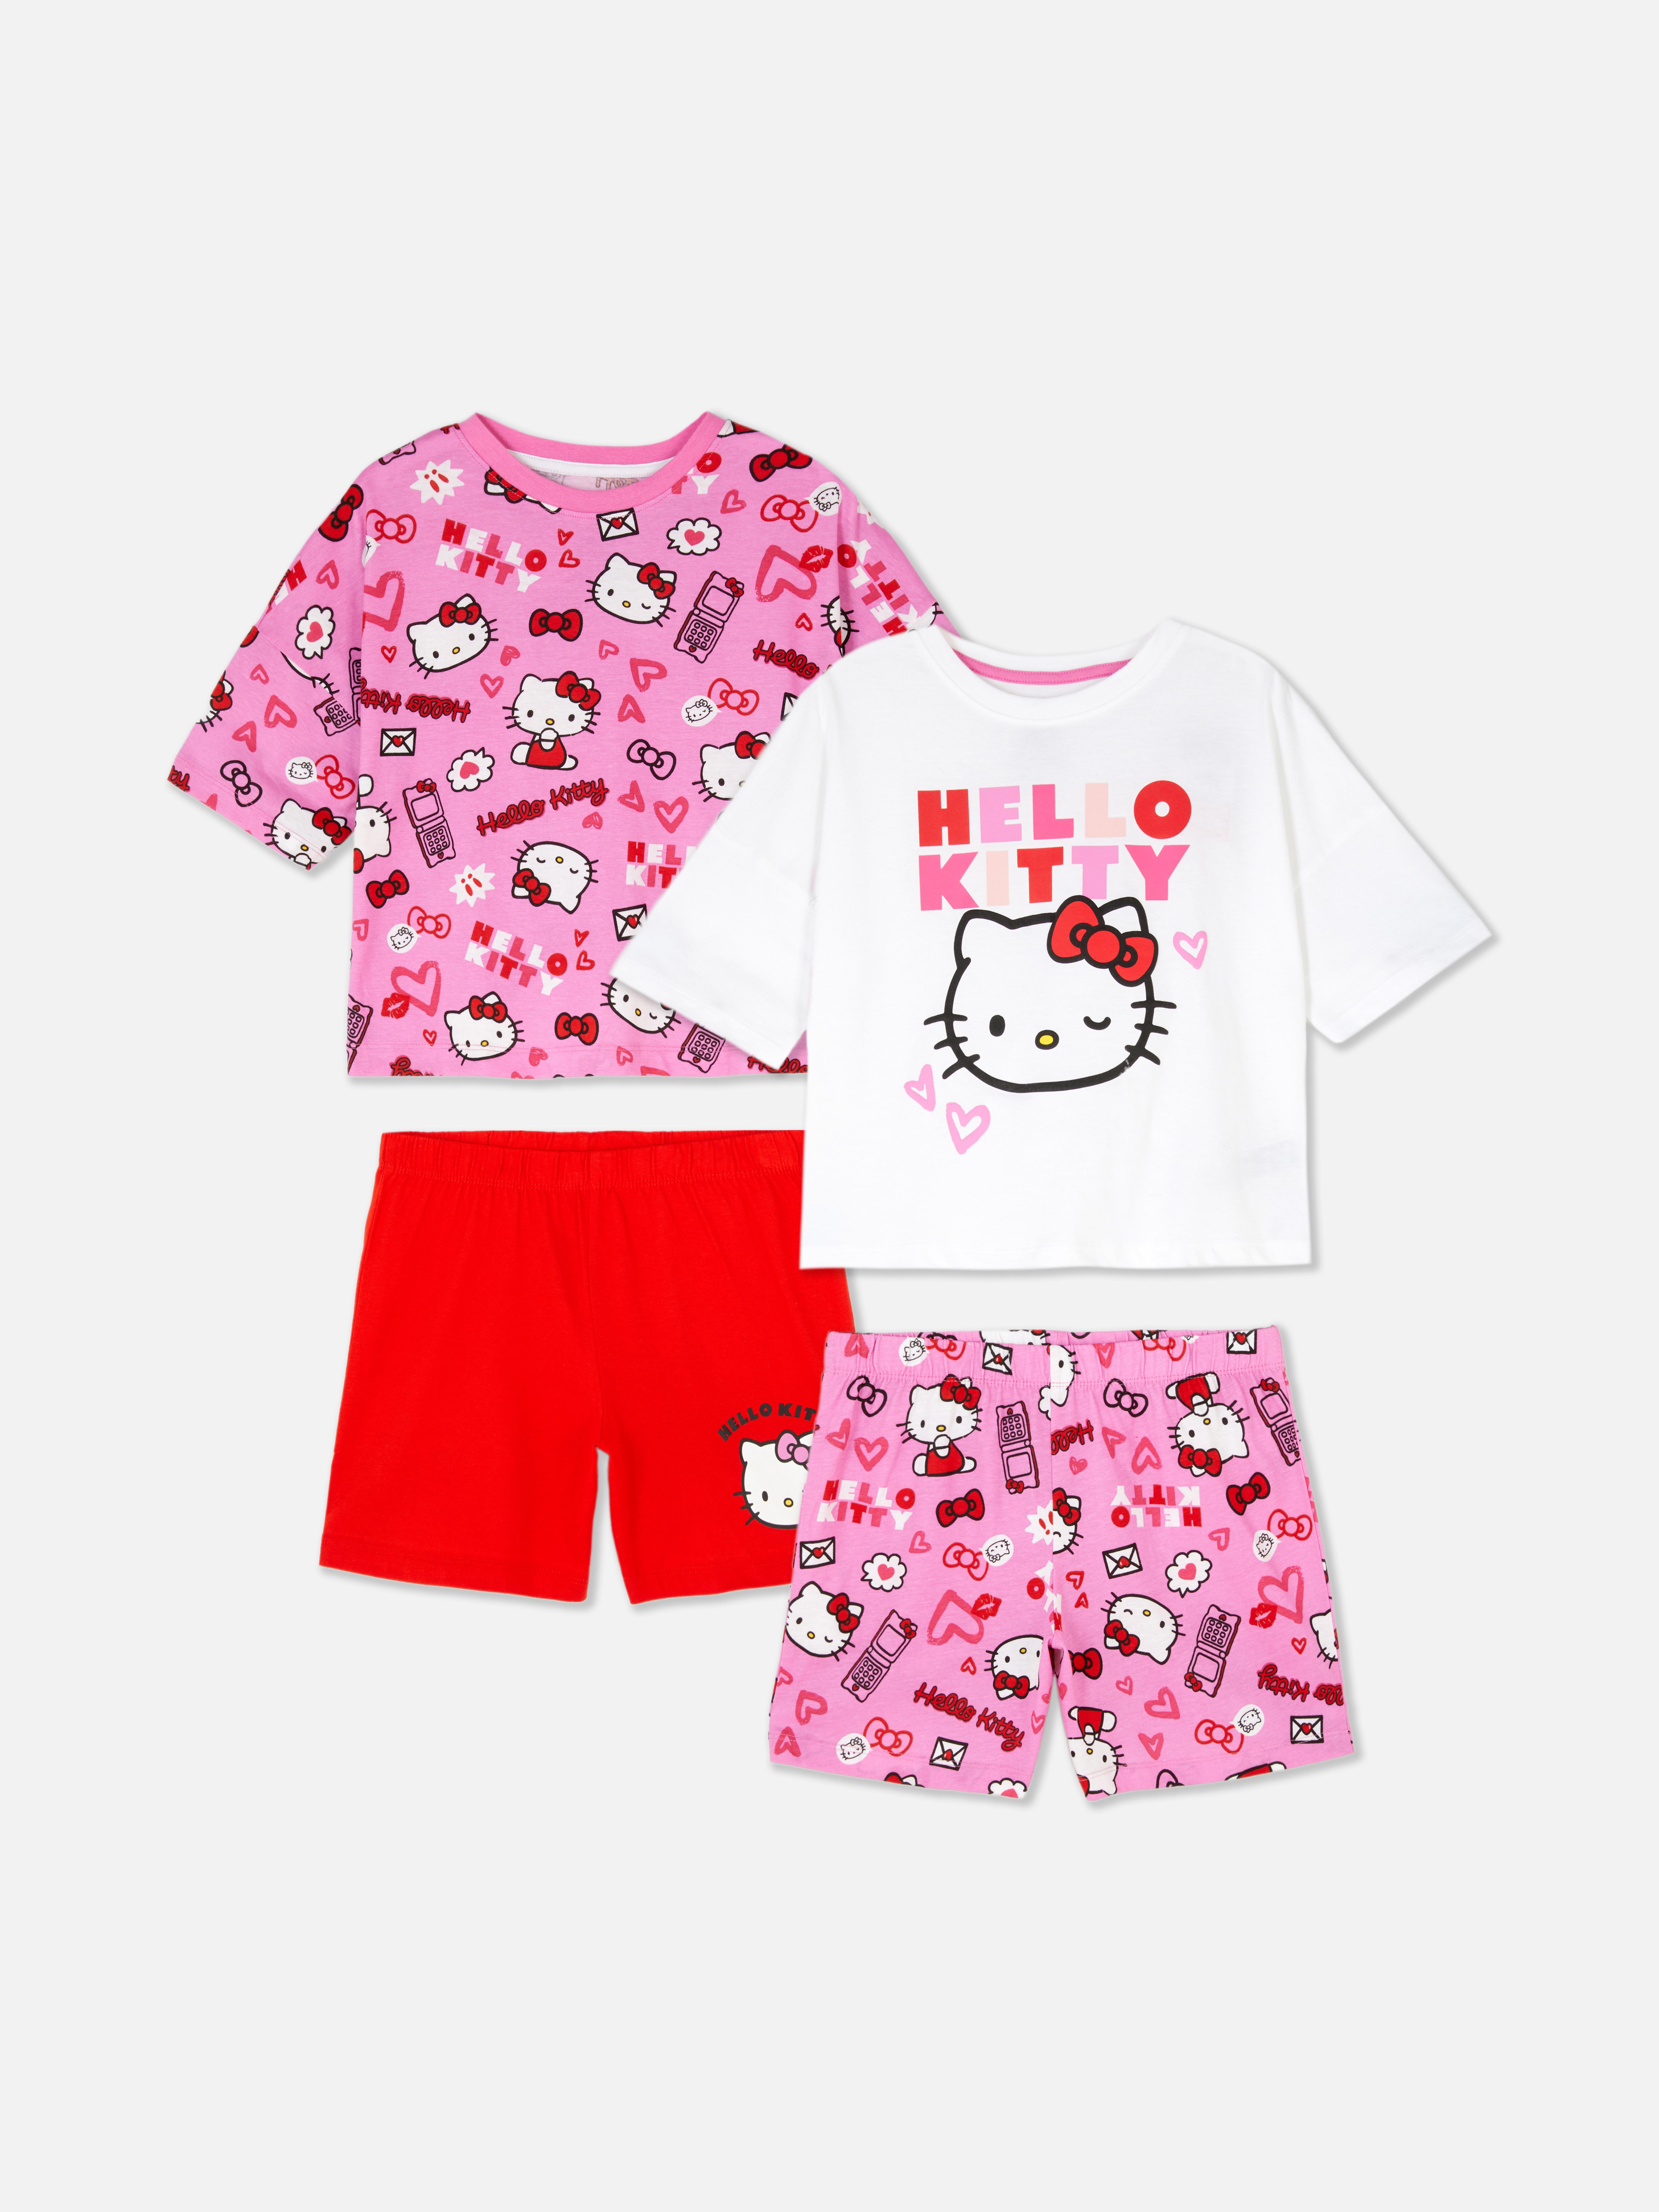 Pack de 2 pijamas cortos de Hello Kitty